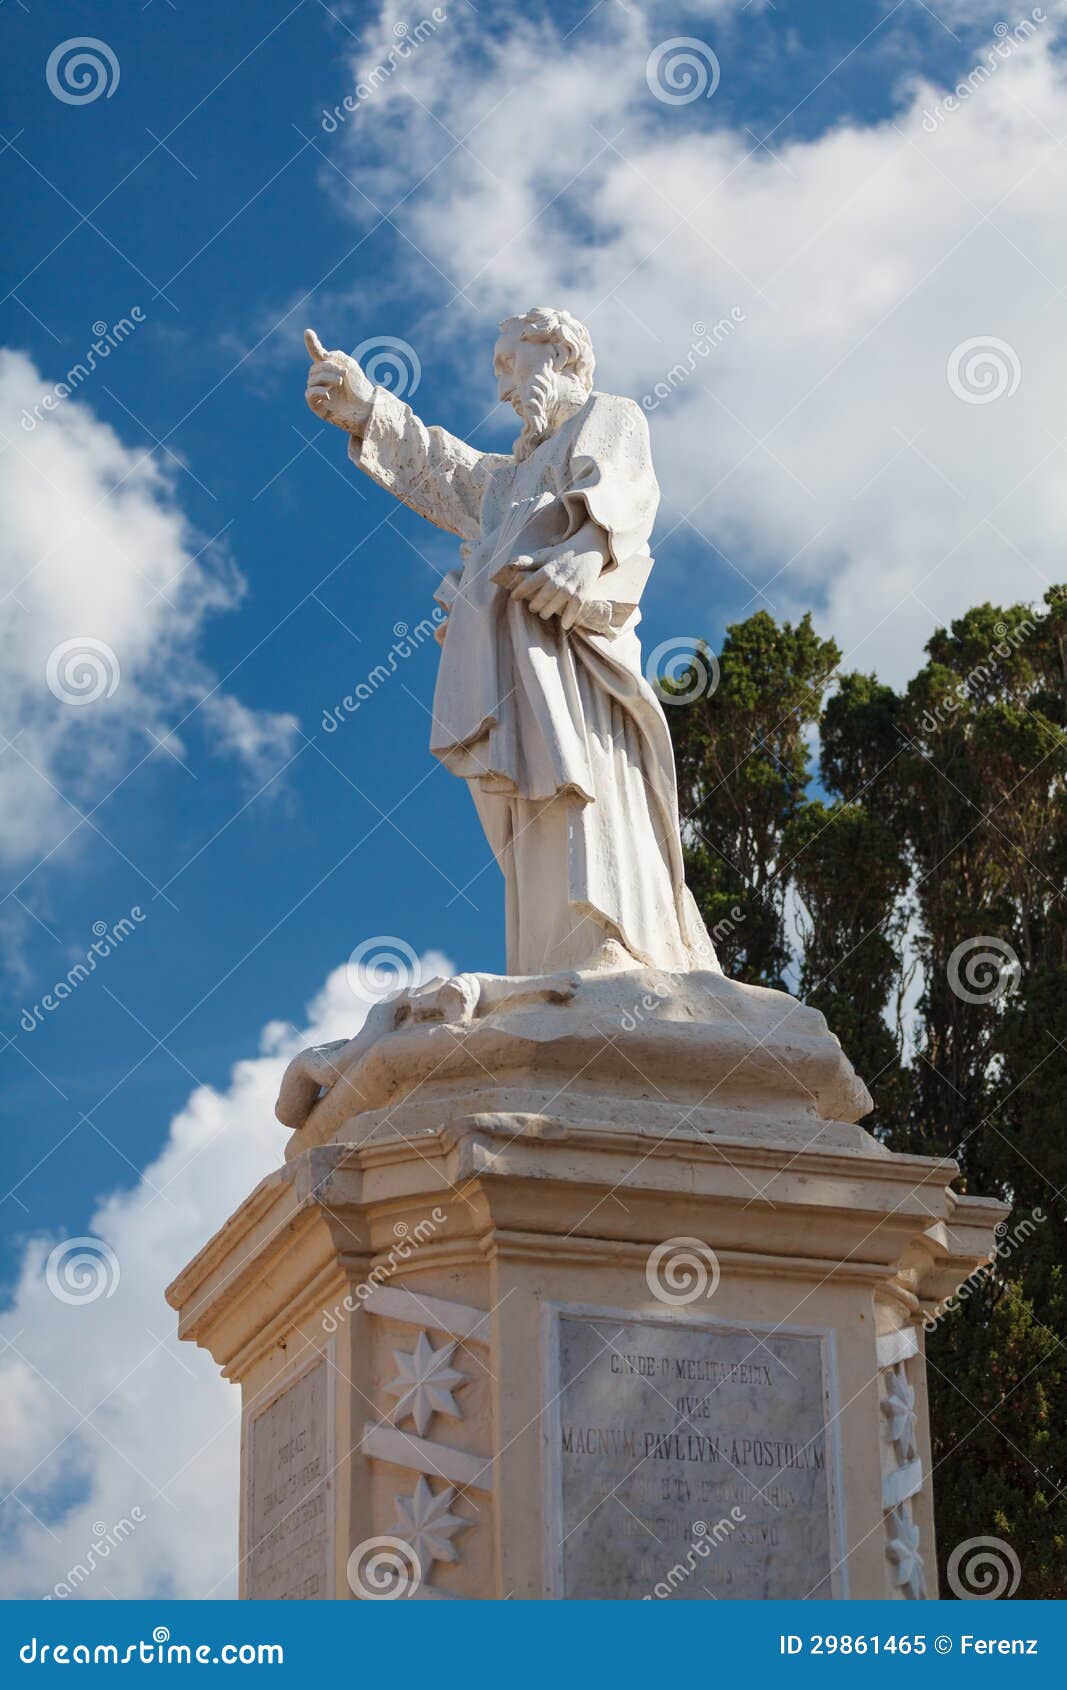 st.paul statue